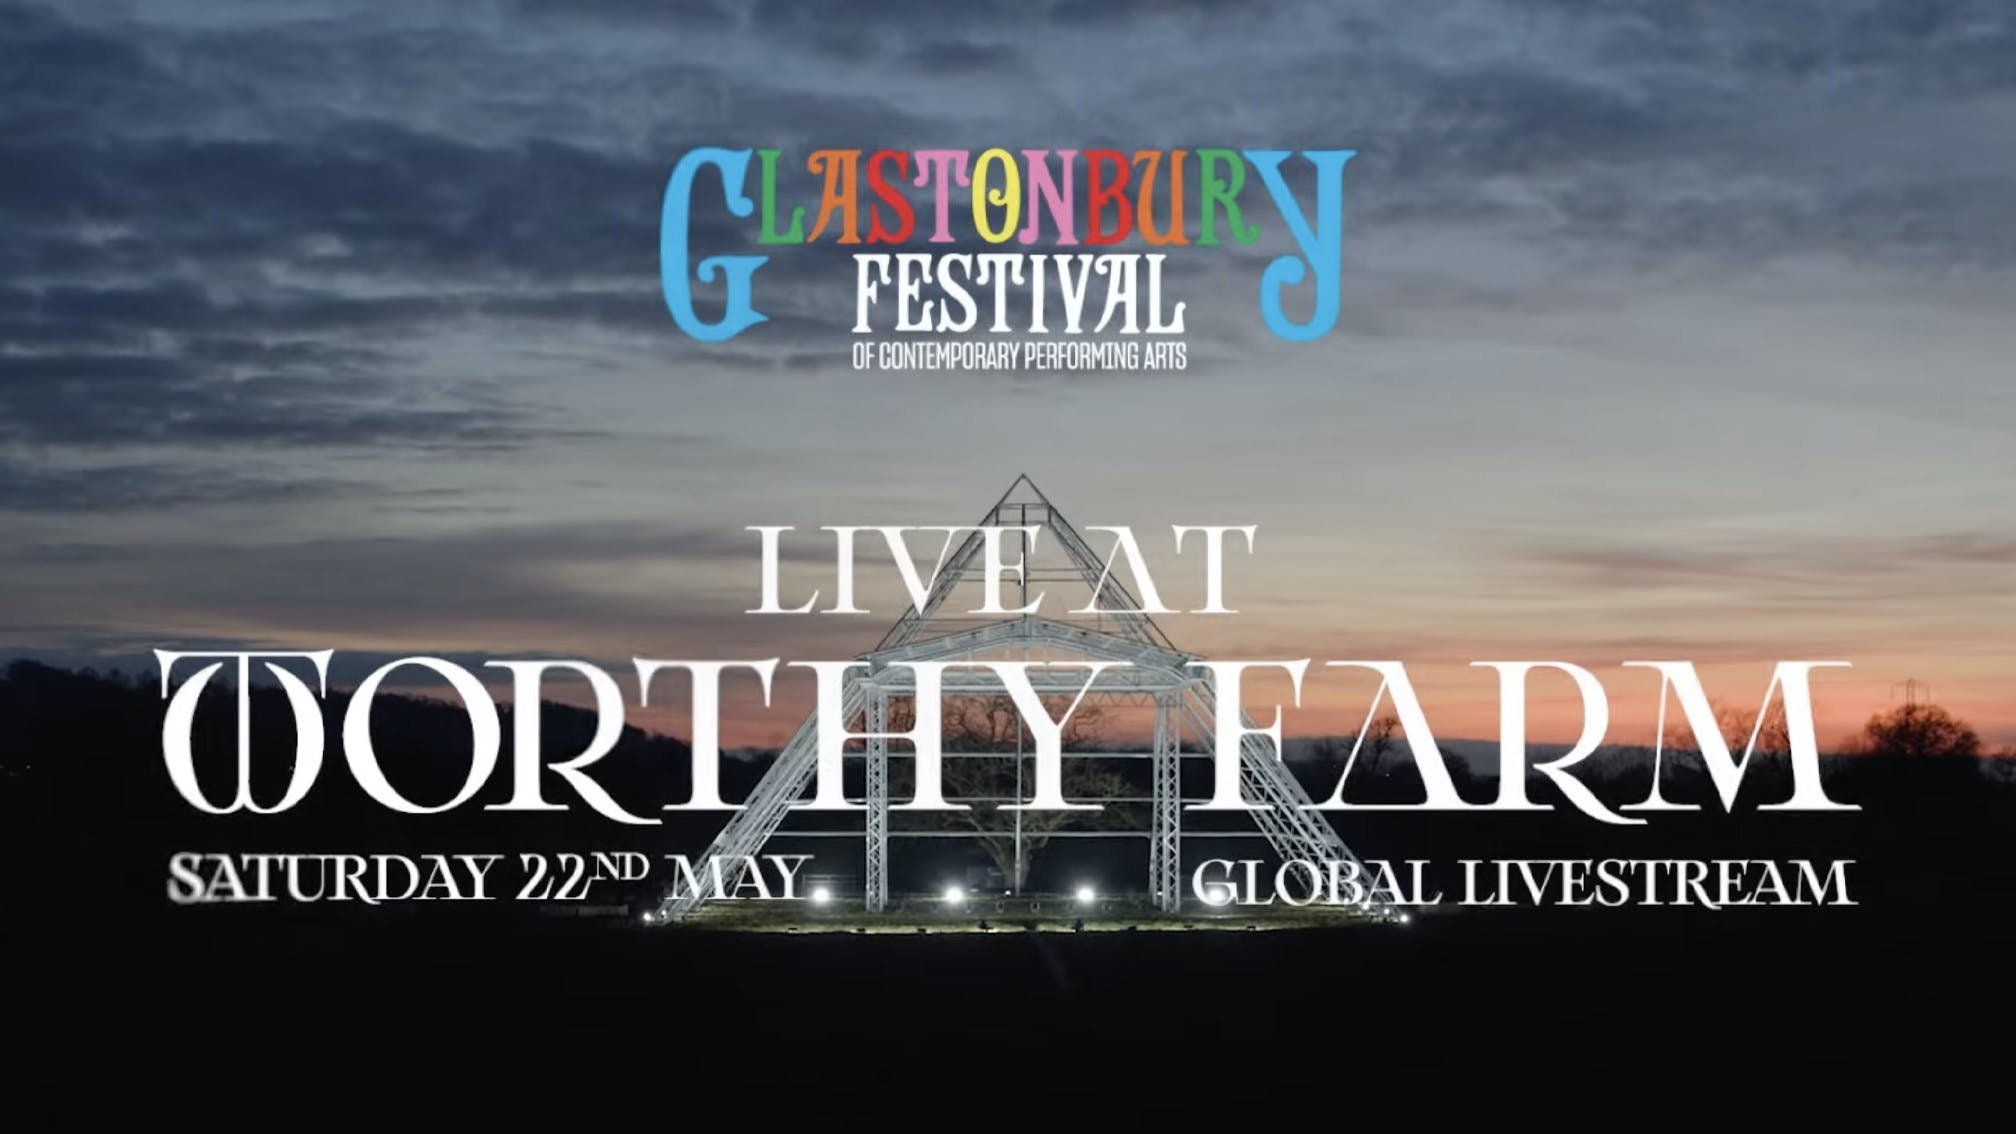 Glastonbury-Live-At-Worthy-Farm-livestream-header.jpg